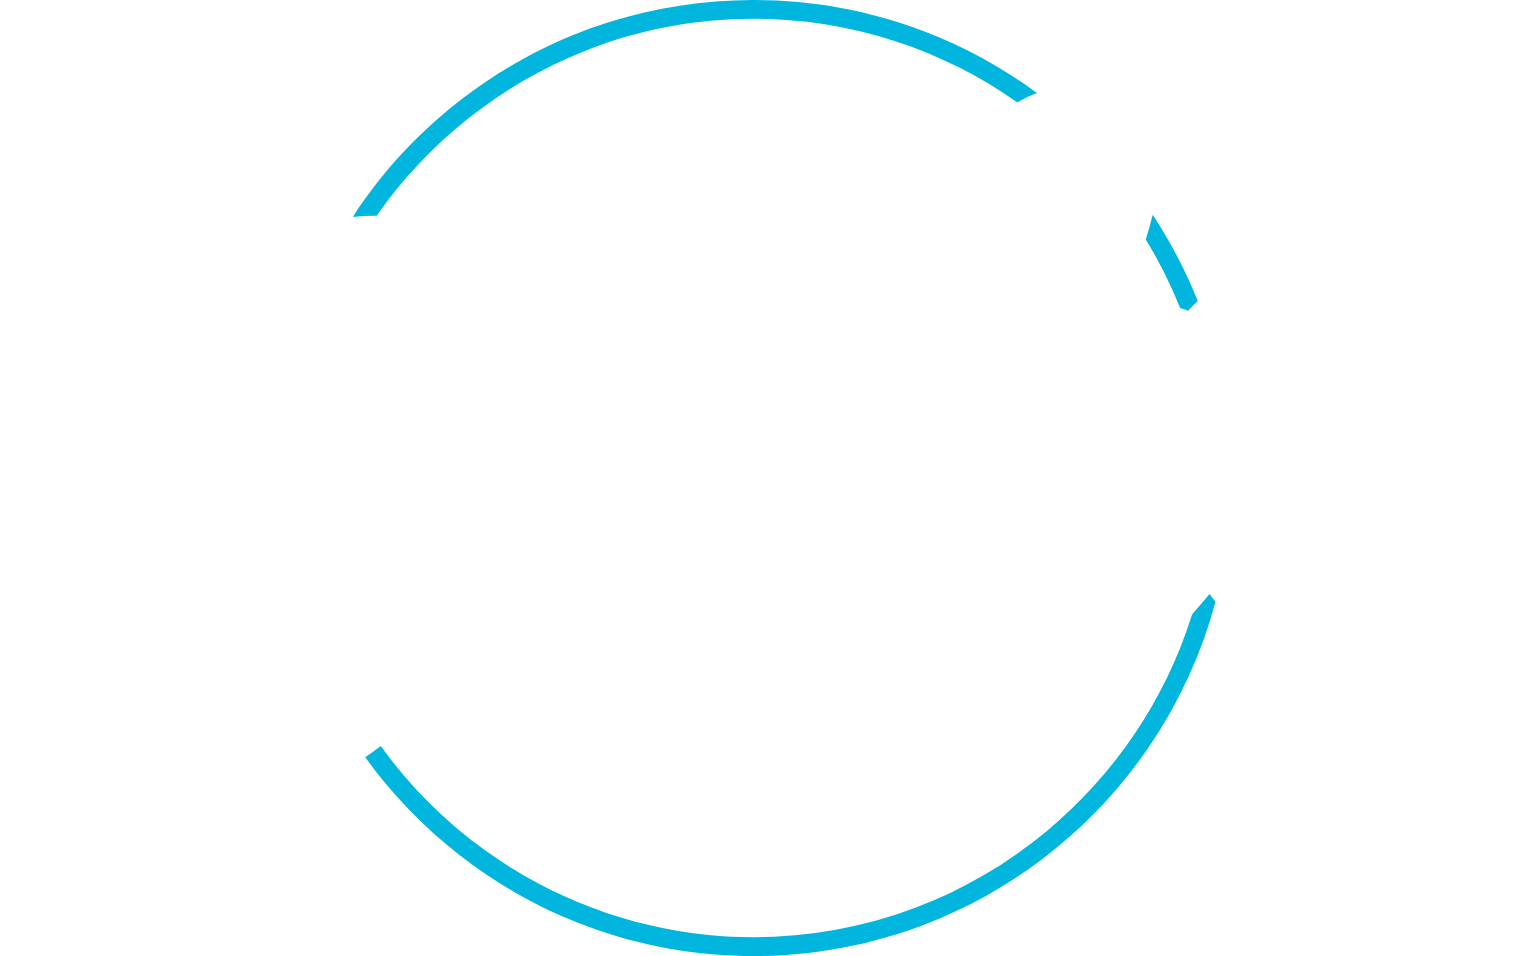 Bowlero logo for dark backgrounds (transparent PNG)